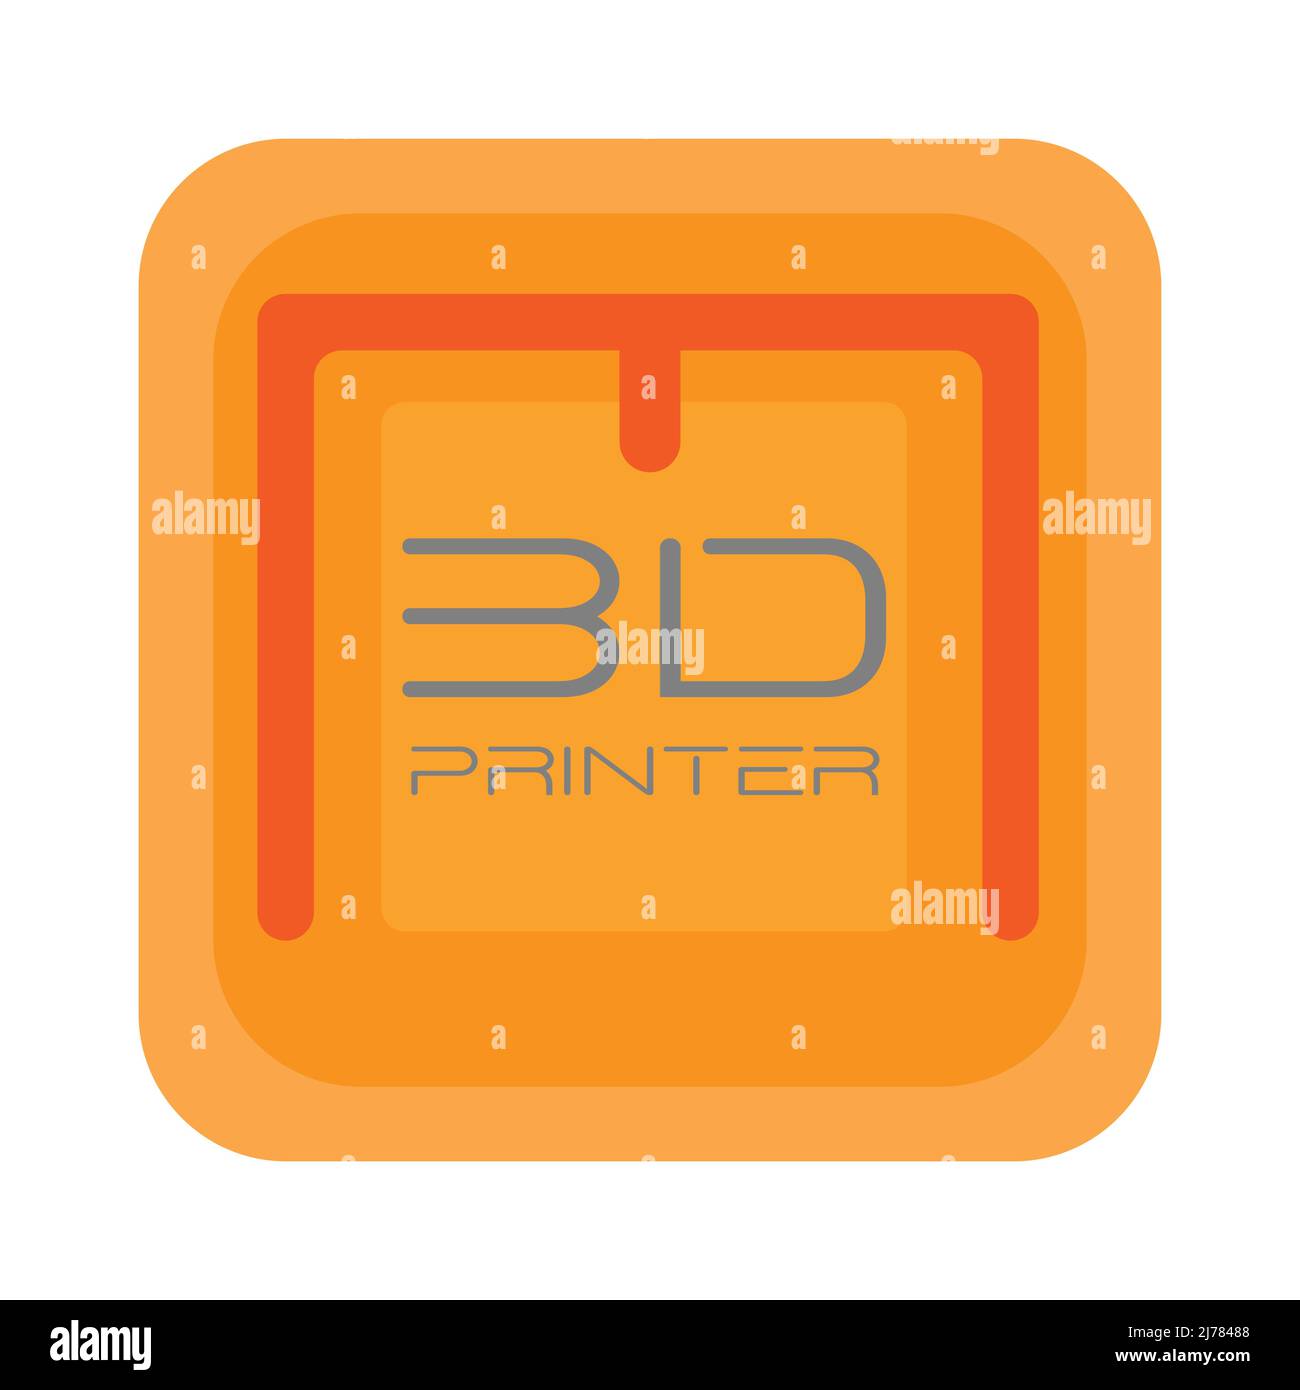 3D Printer flat vector illustration Stock Vector